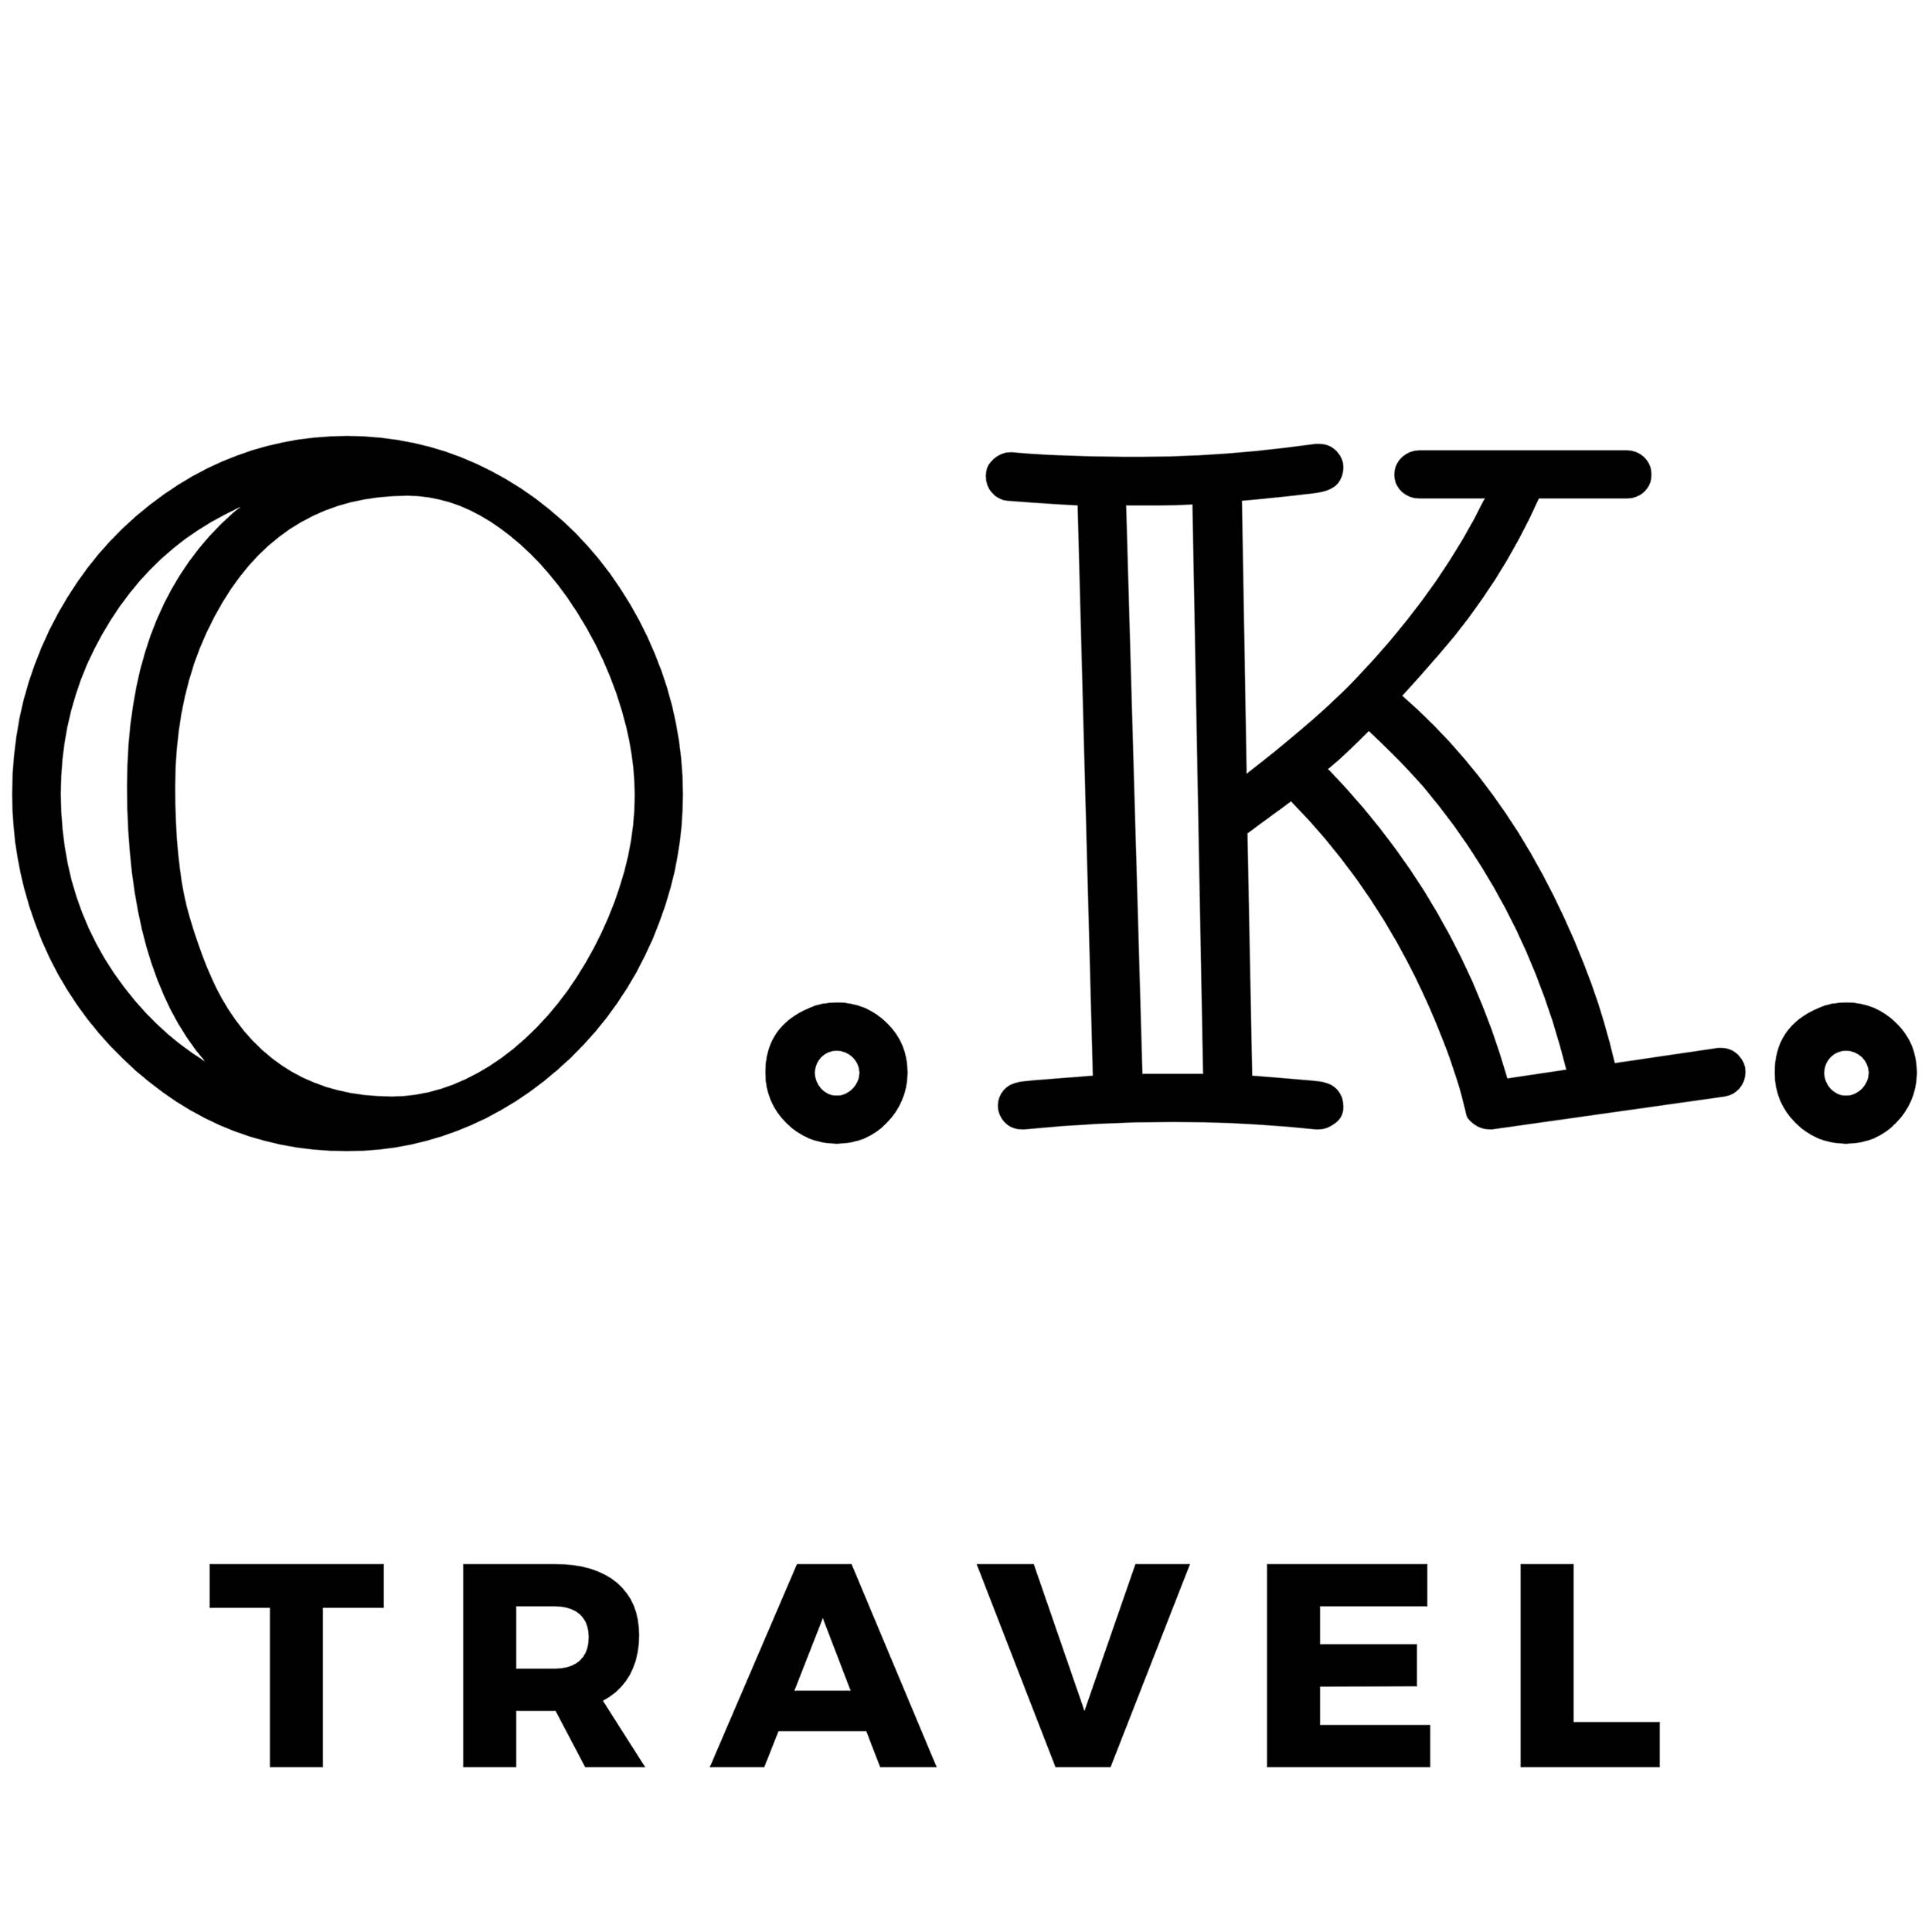 OK  Travel